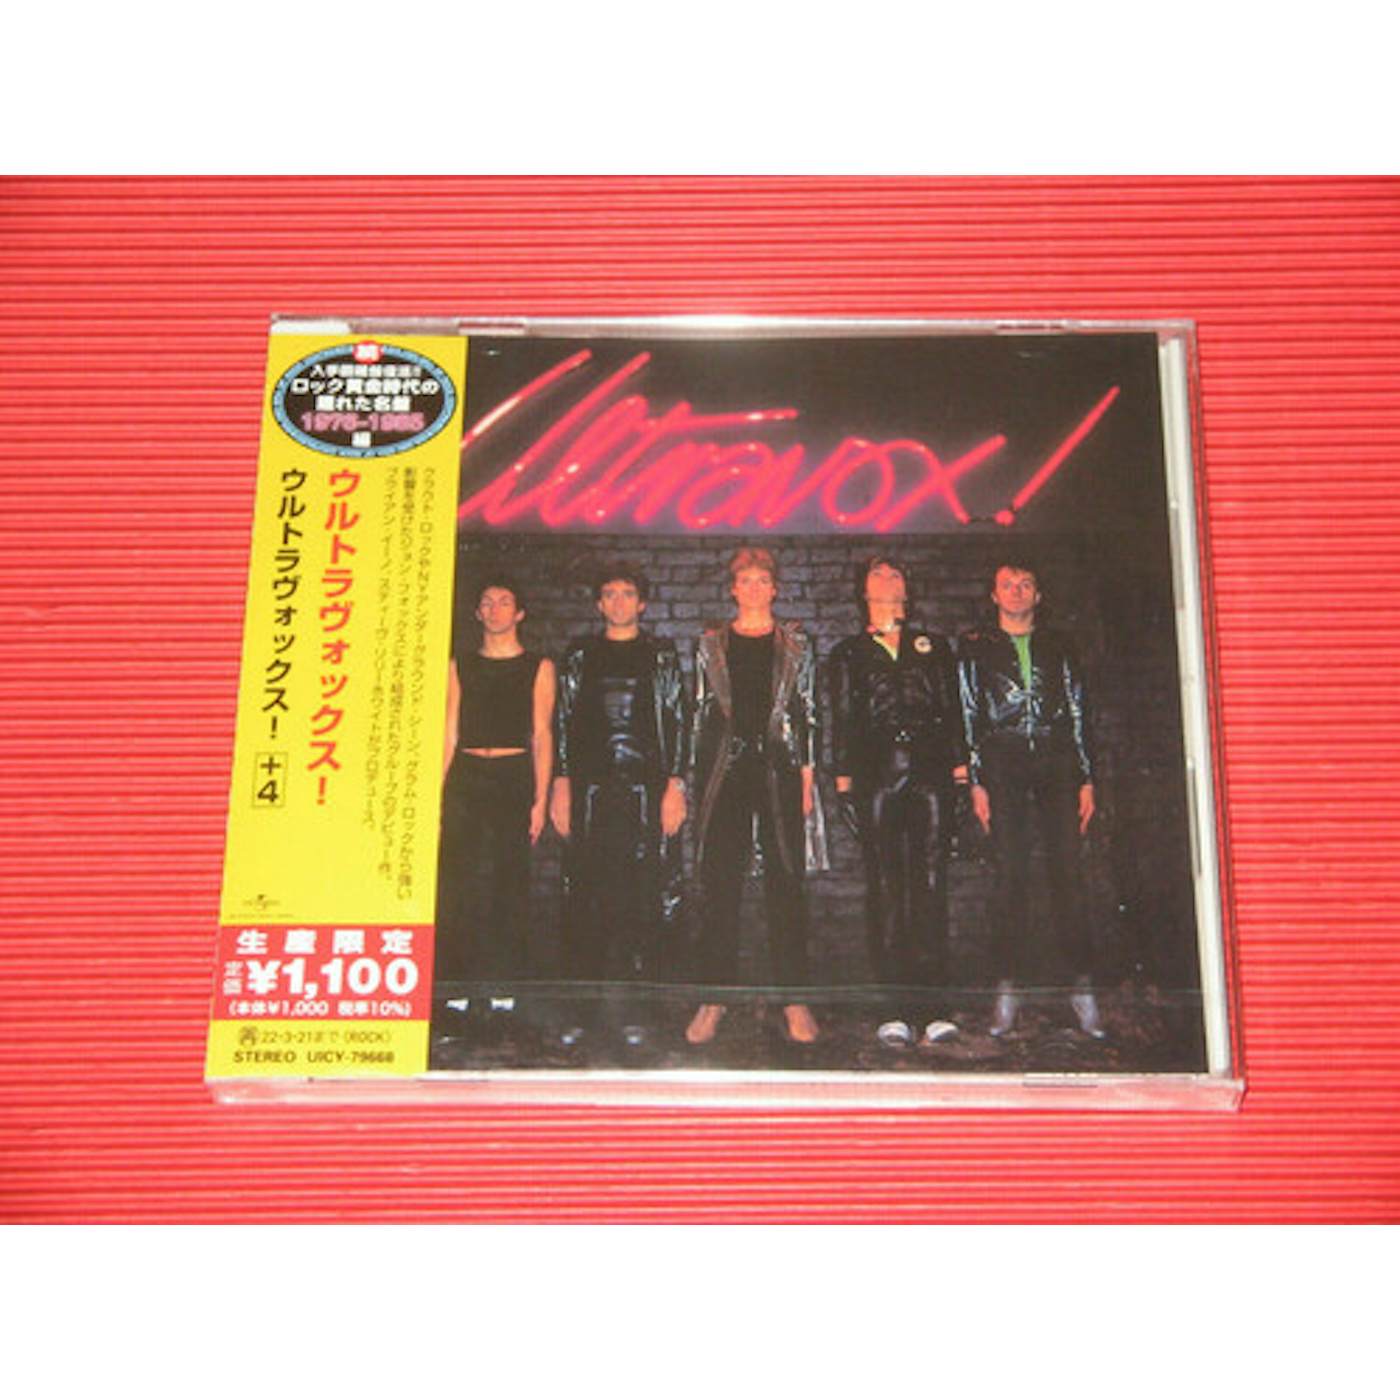 ULTRAVOX CD